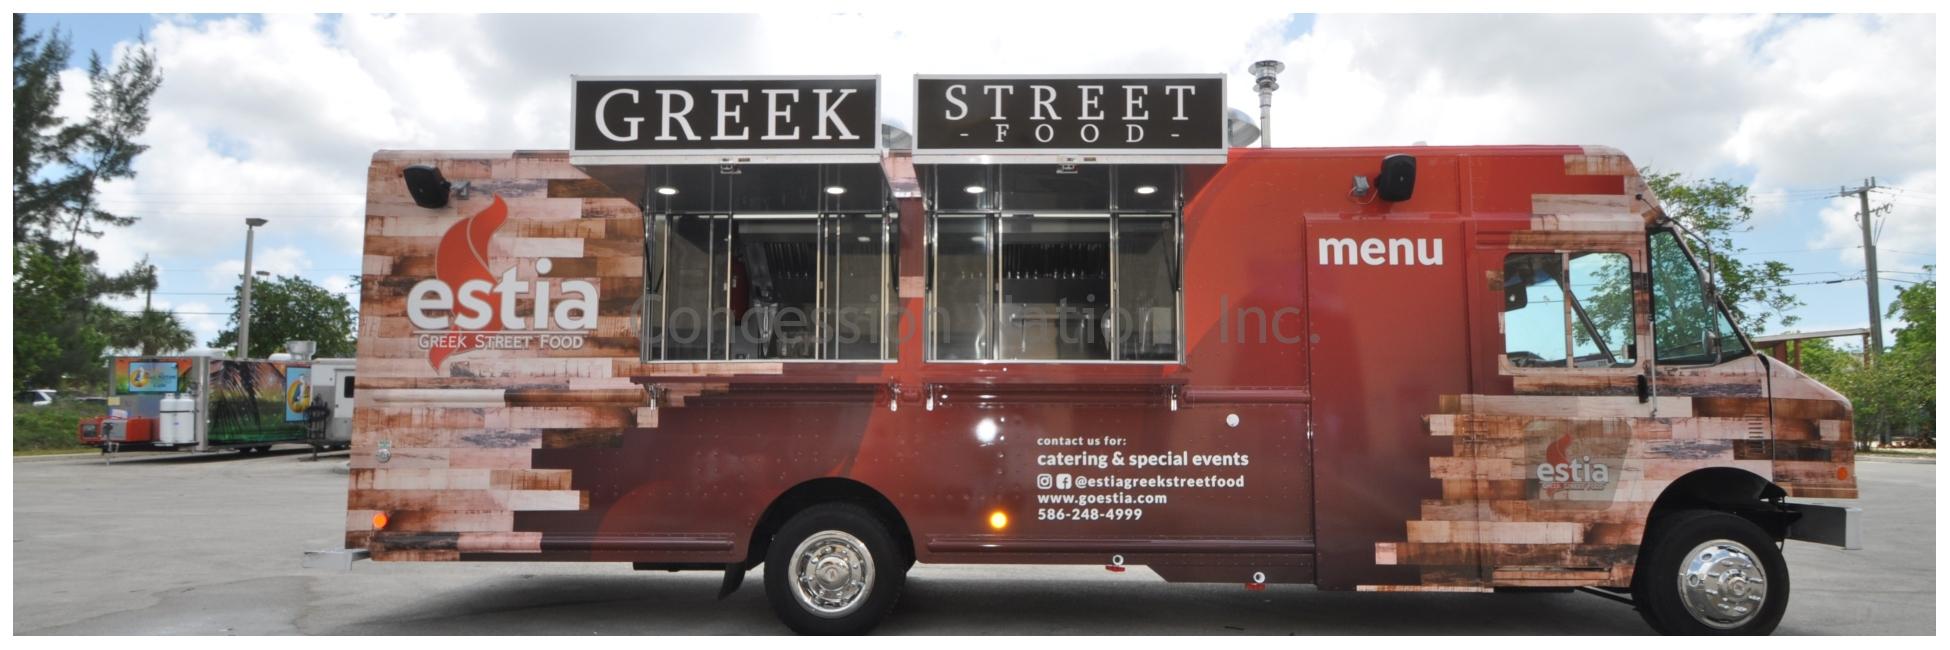 Food Truck Banner_Estia Greek Street Food